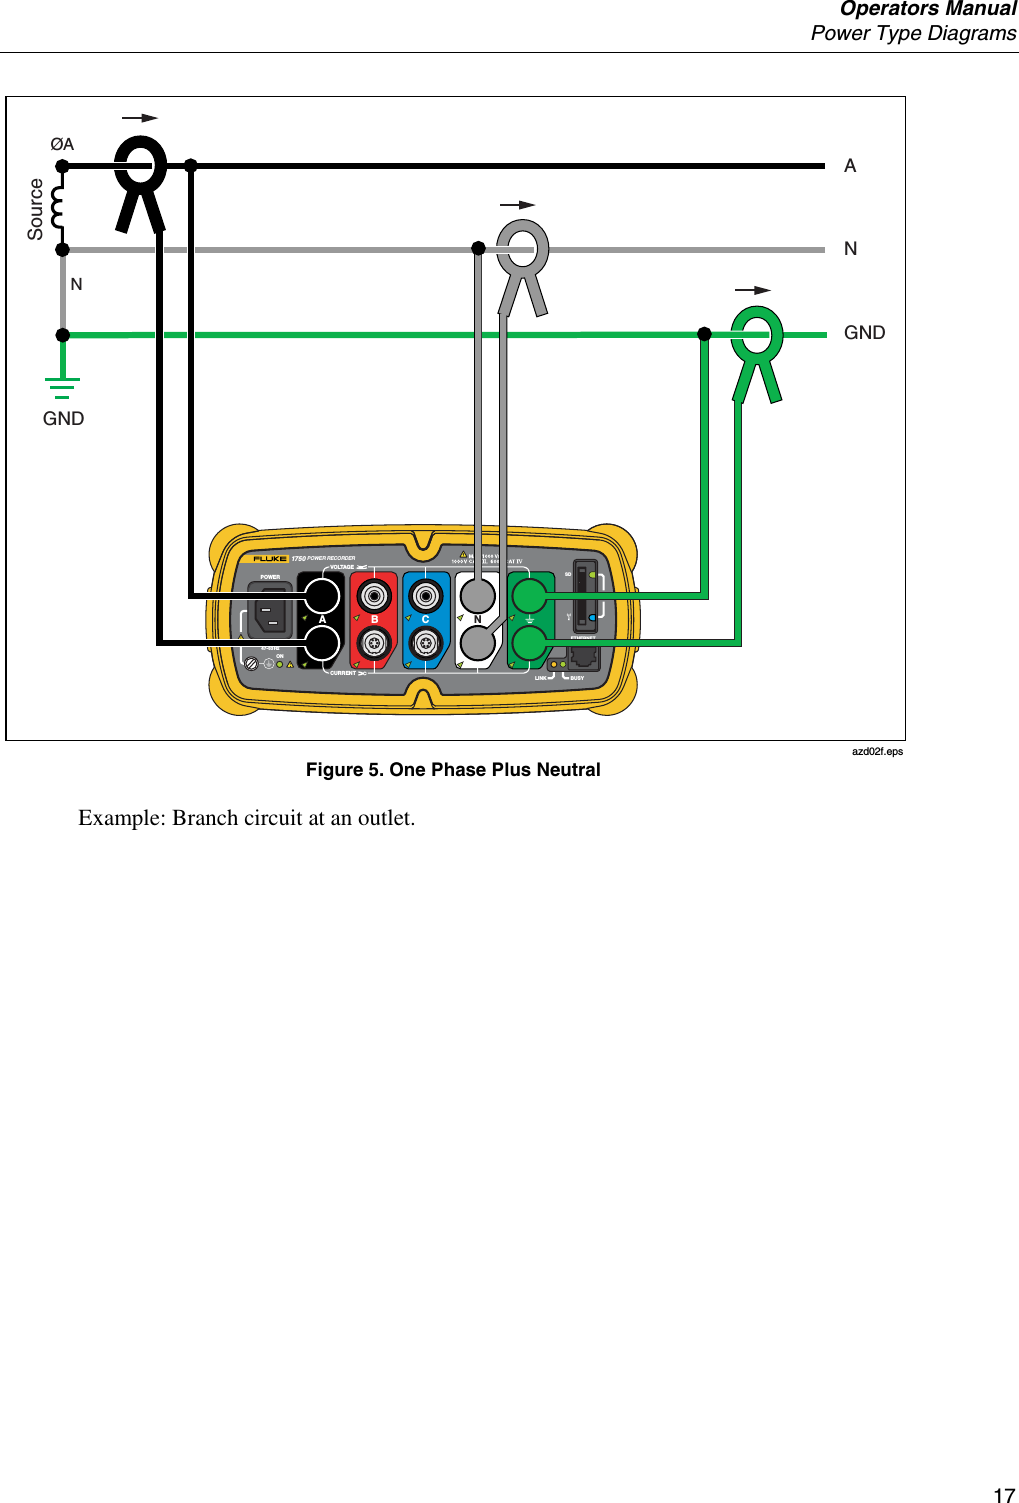  Operators Manual  Power Type Diagrams     17 SDETHERNETPOWER1750 POWER RECORDERONBUSYLINK100-240 V   47- 63HzBACNVO LTAG ECURRENTANGNDGNDNØASource azd02f.eps Figure 5. One Phase Plus Neutral Example: Branch circuit at an outlet. 